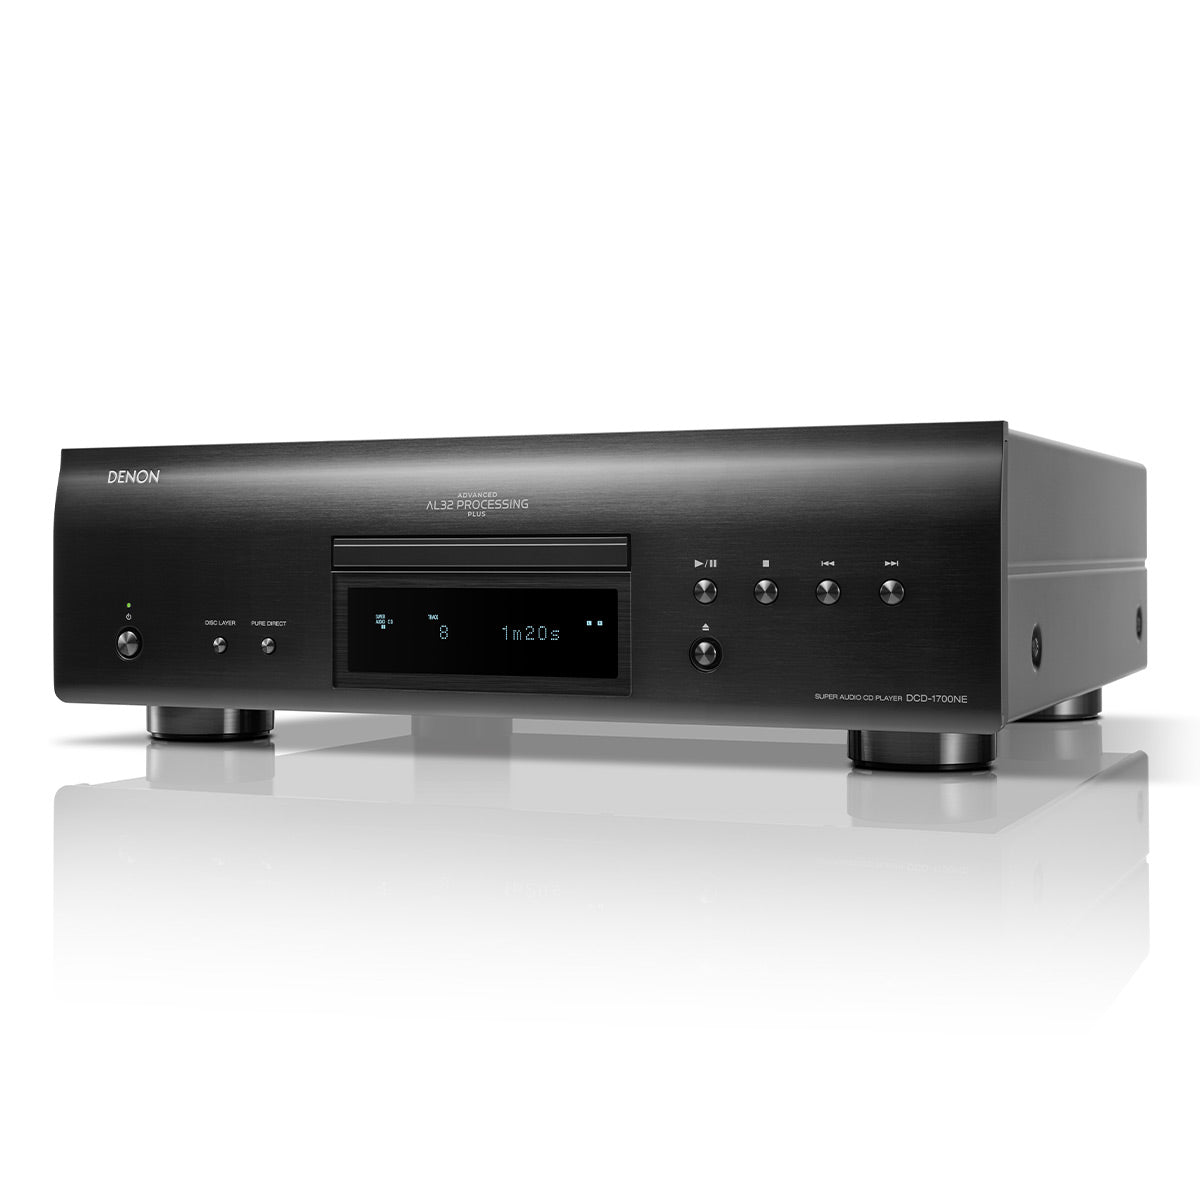 Denon DCD-1700NE CD/SACD Player with Advanced AL32 Processing Plus (Black)